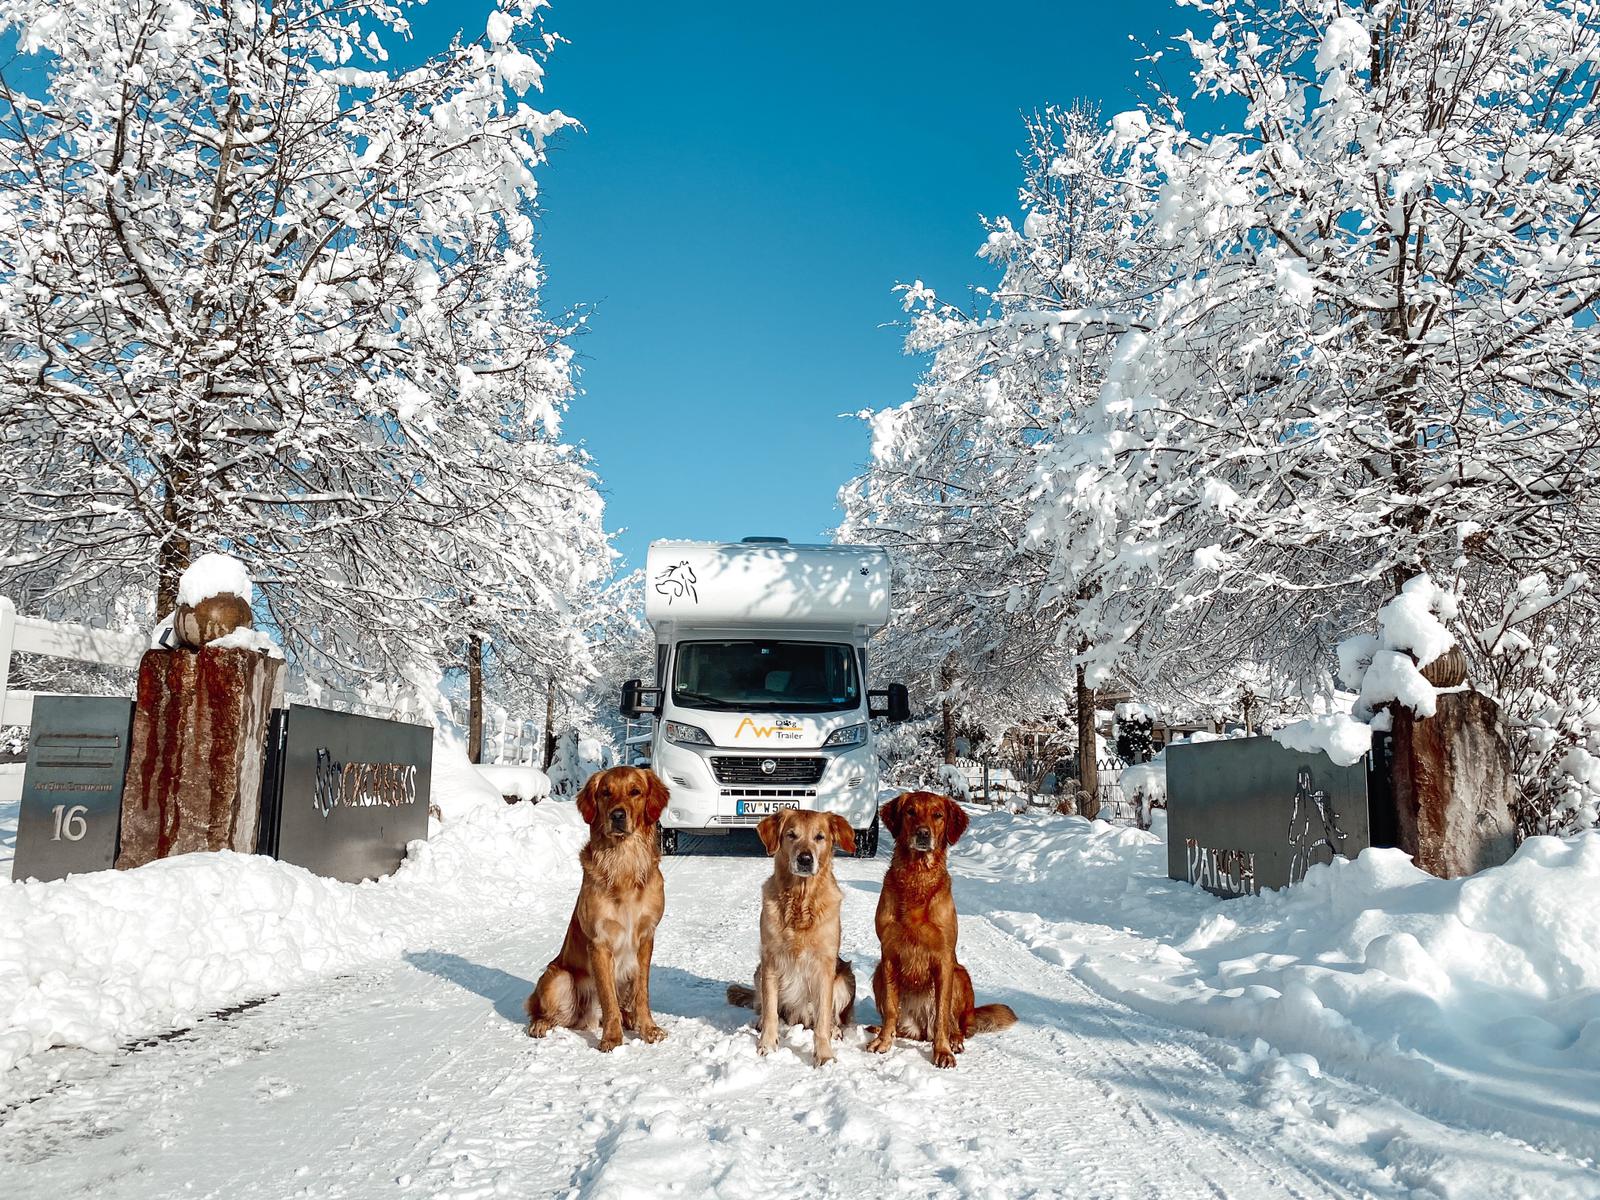 AW Hundewohnmobil, Winterbetrieb, Hundewohnmobil im Schnee